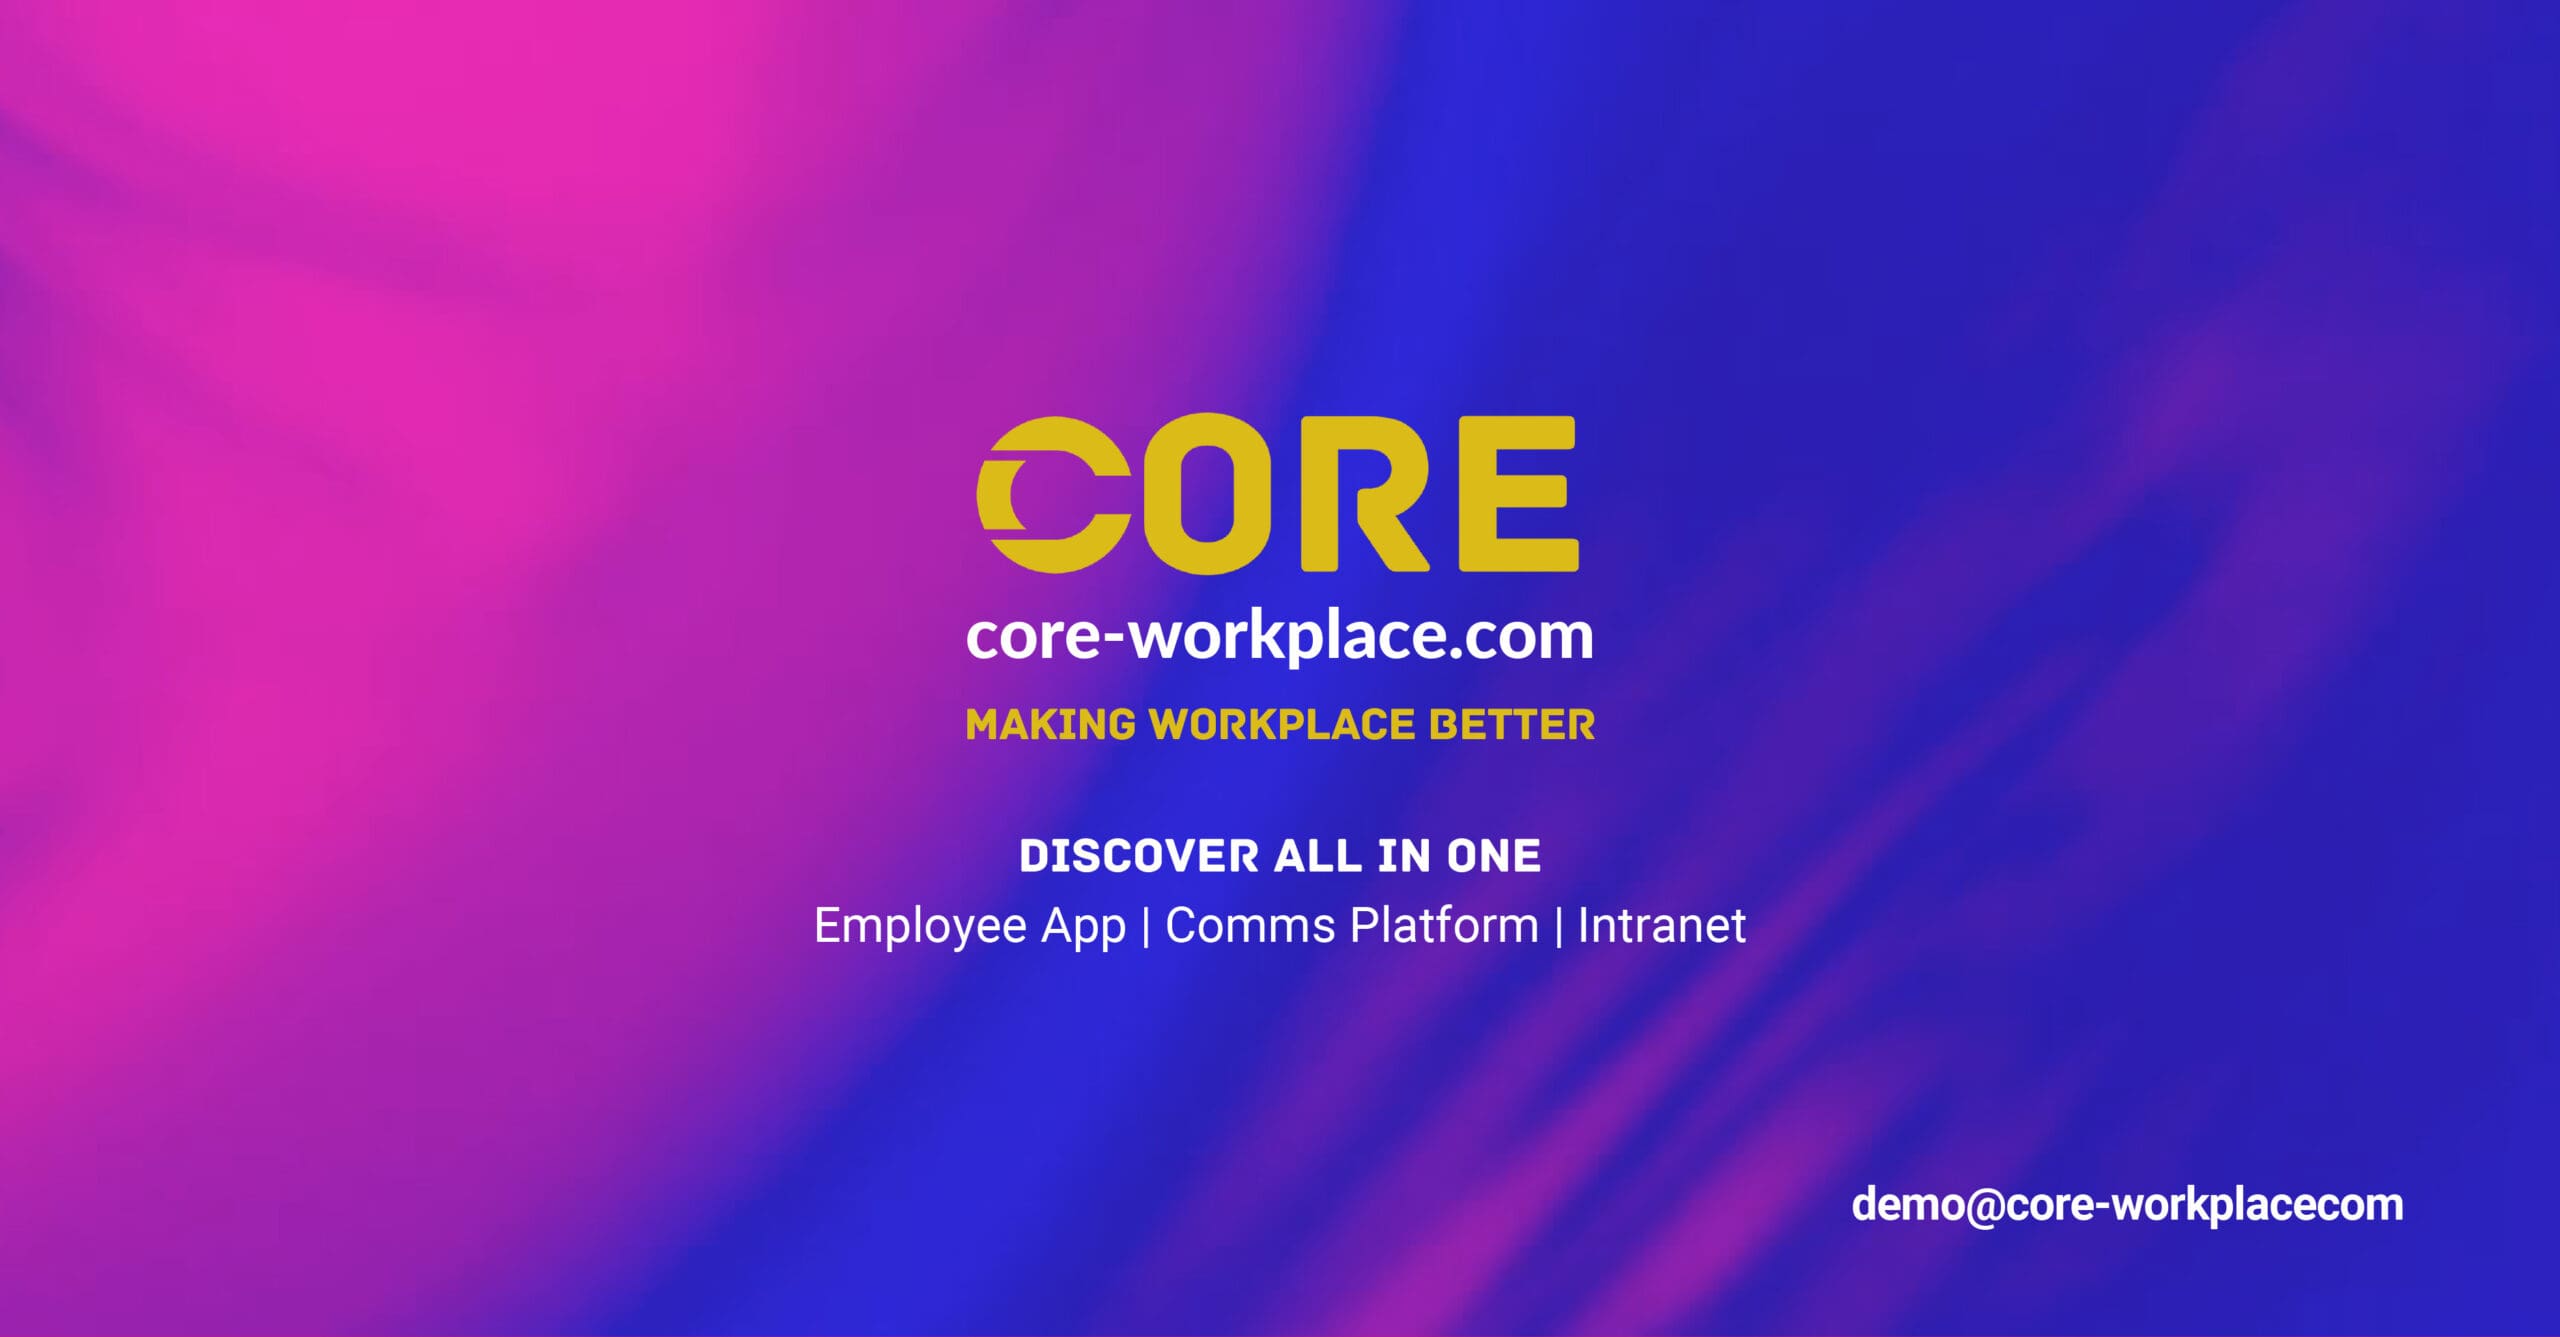 (c) Core-workplace.com